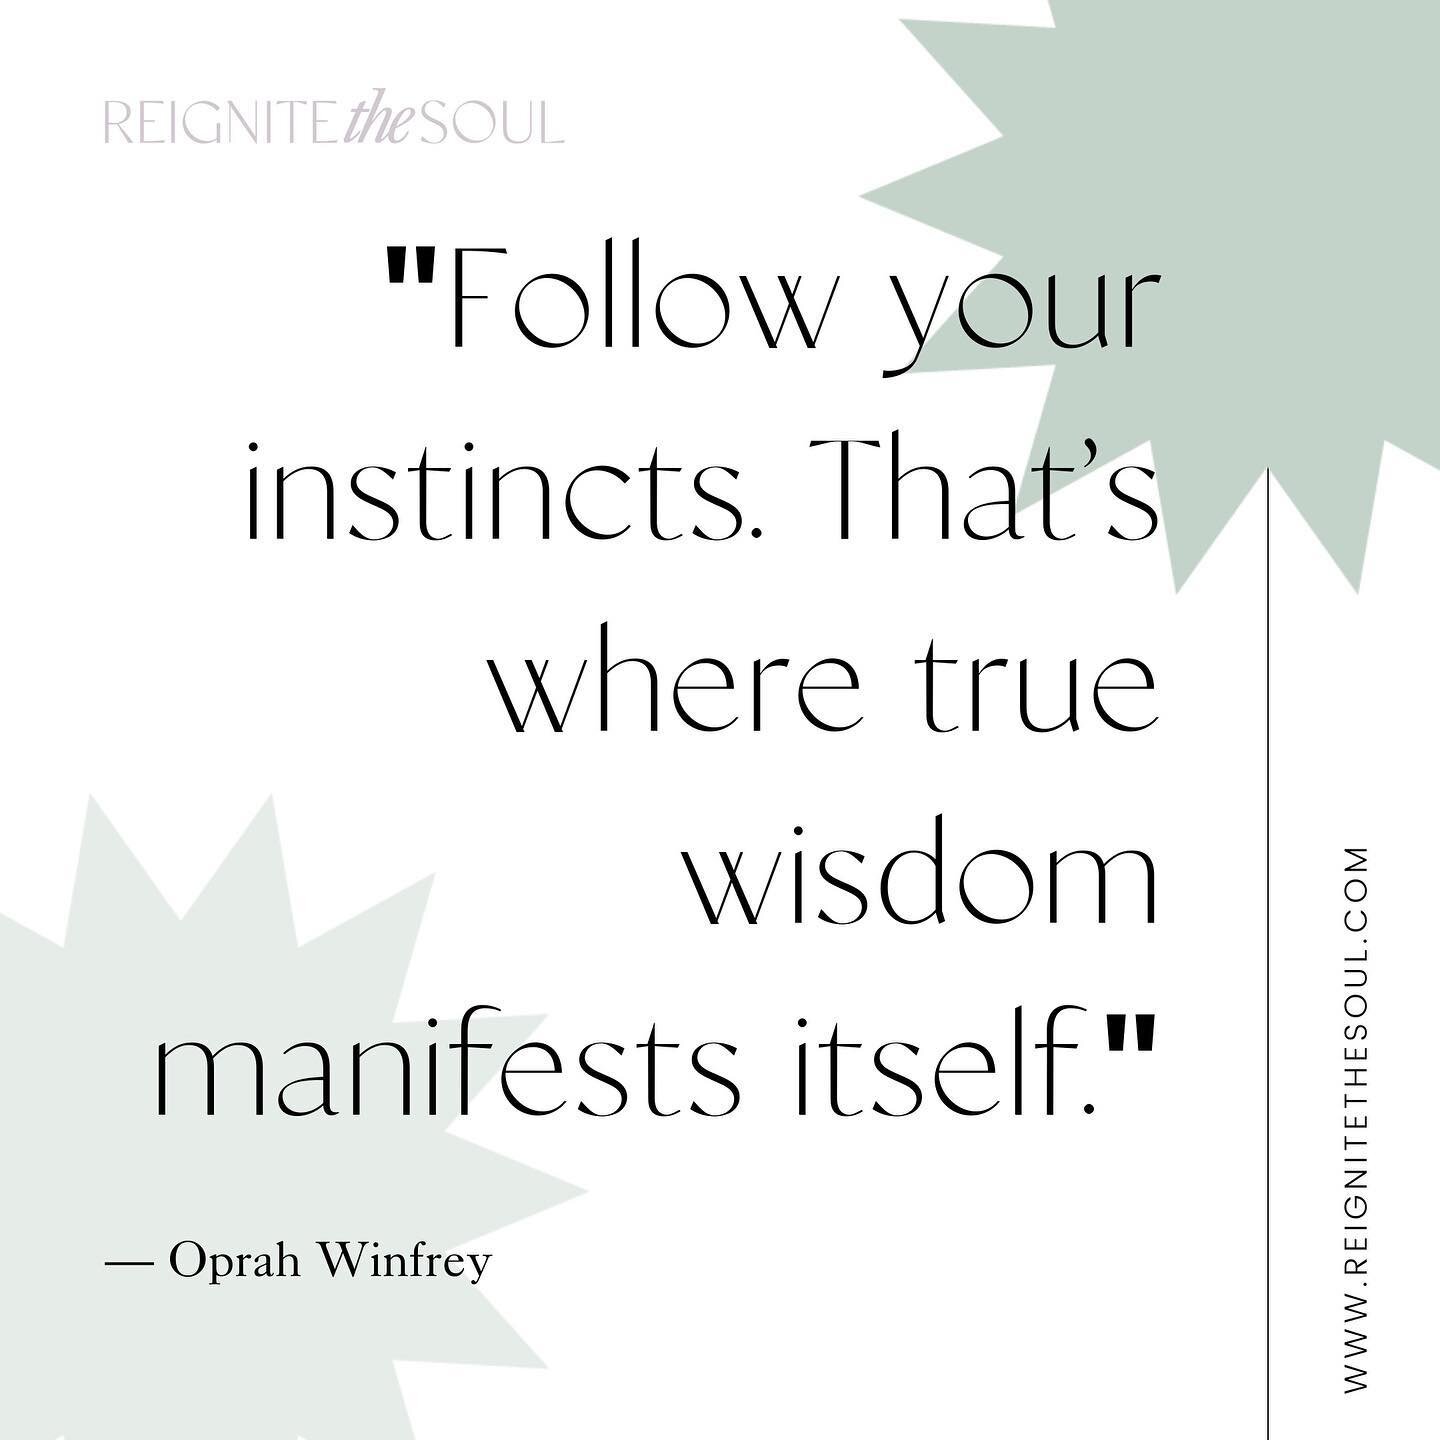 &ldquo;Follow your instincts. That&rsquo;s where true wisdom manifests itself.&rdquo; (Oprah Winfrey)